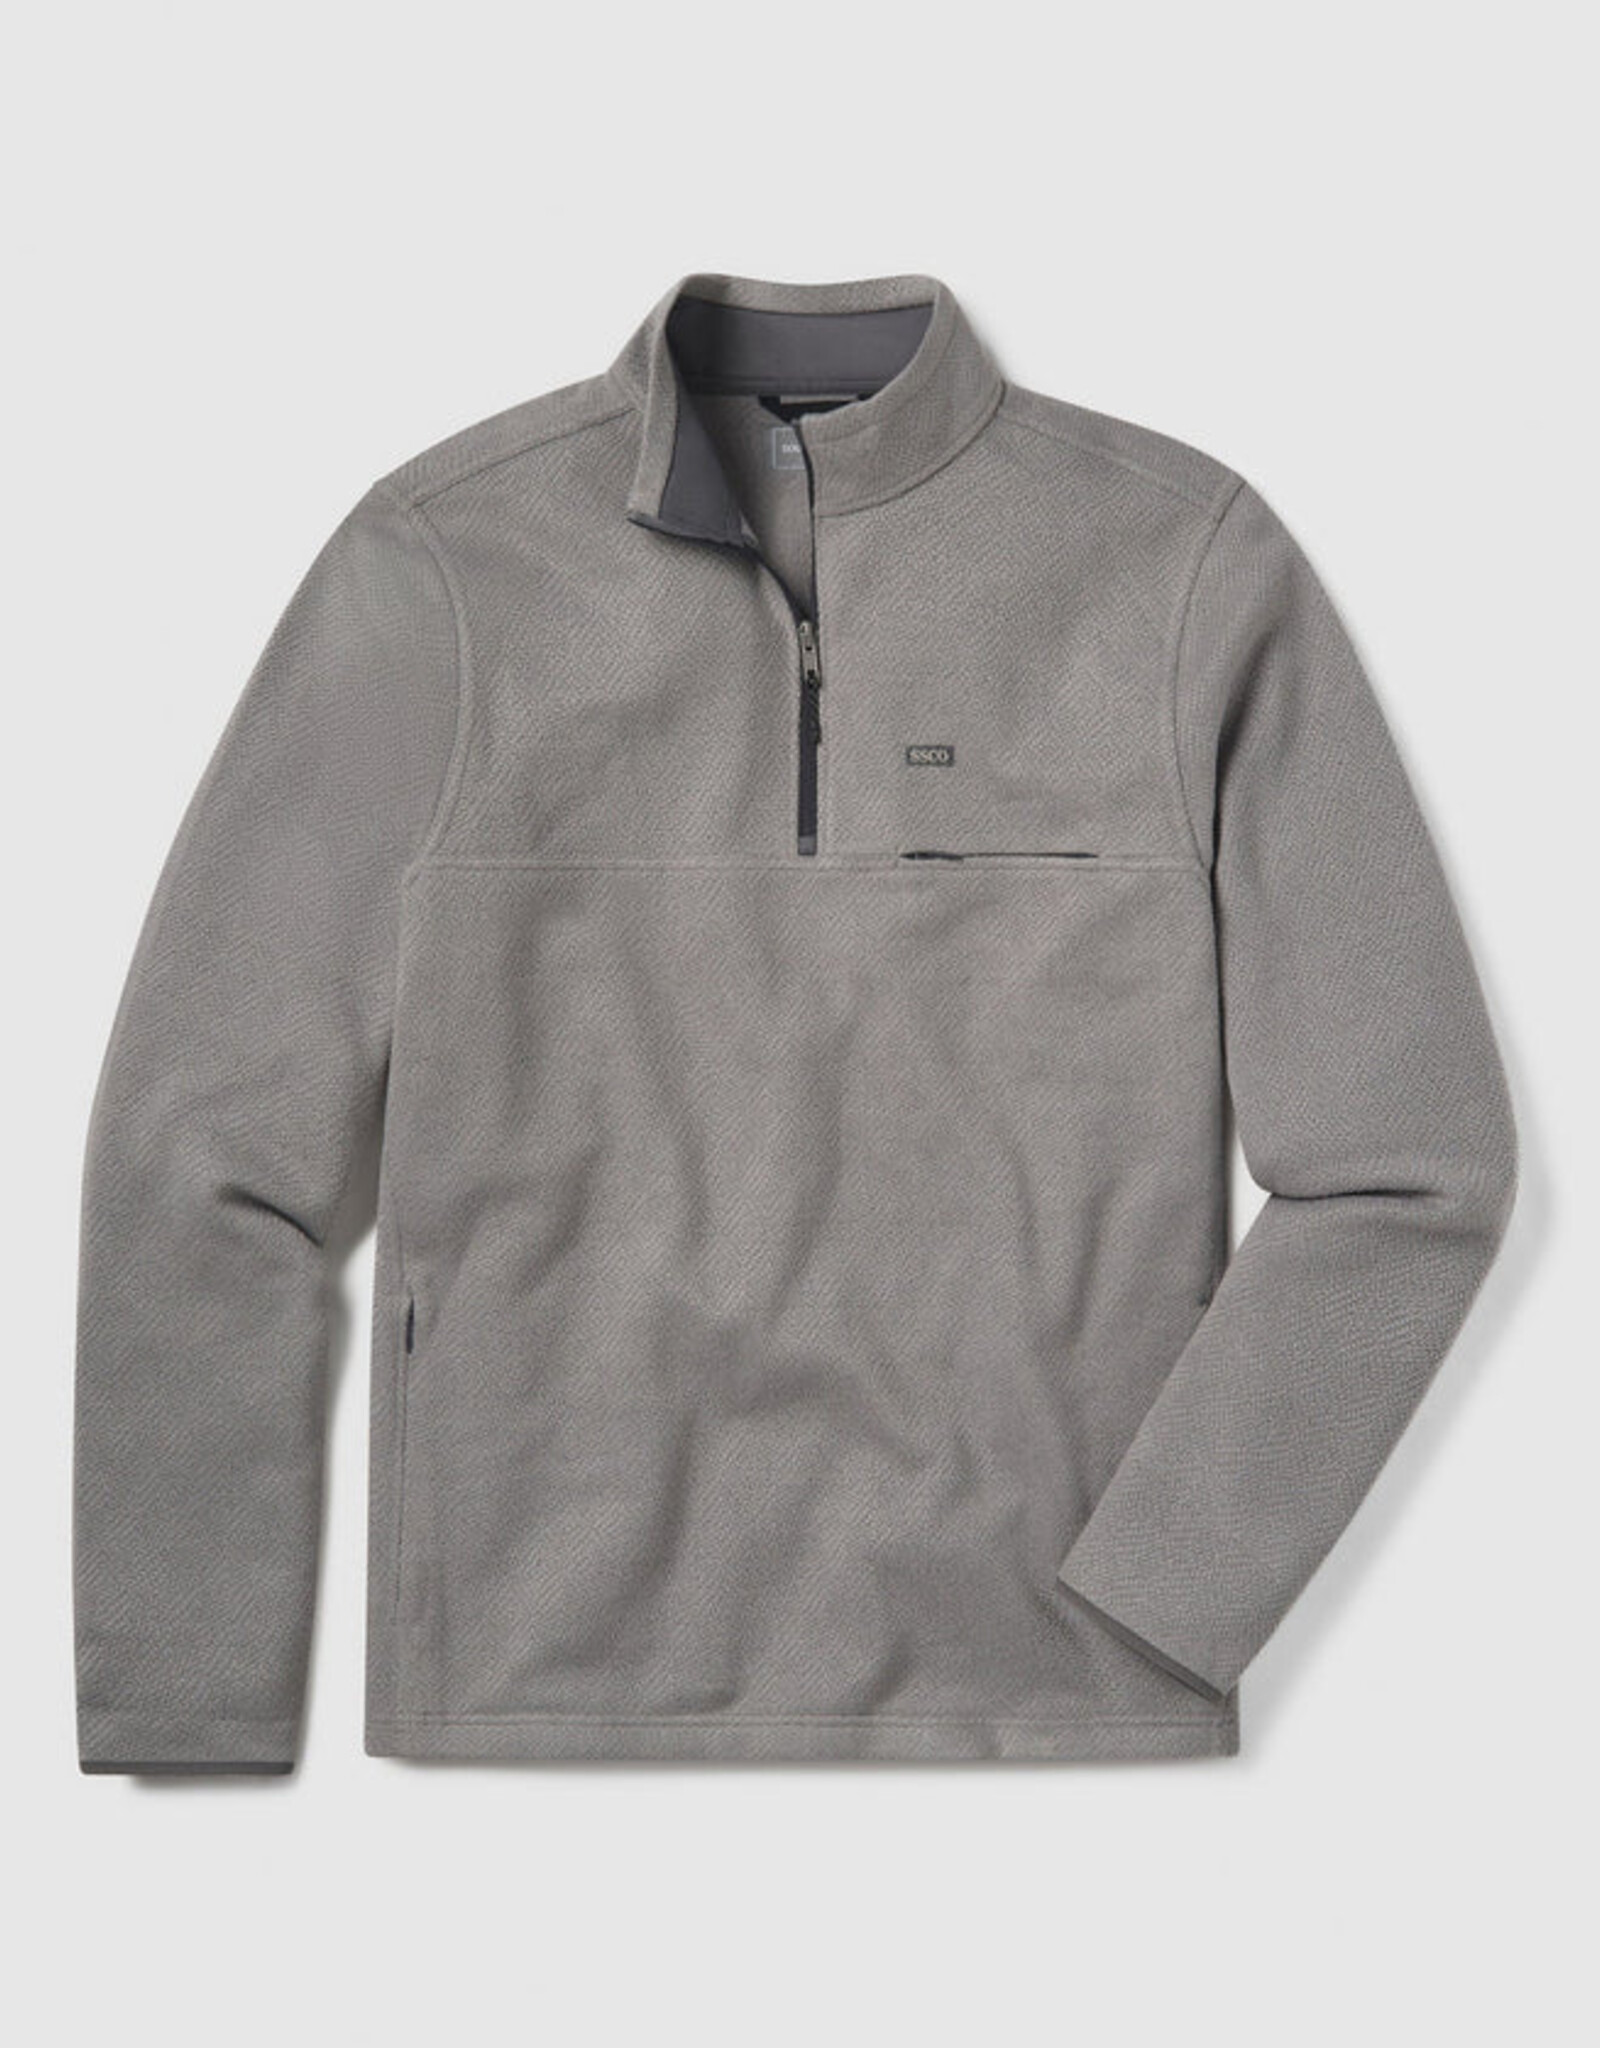 Southern Shirt Company Southern Shirt Co. Tundra Qtr Zip Pullover